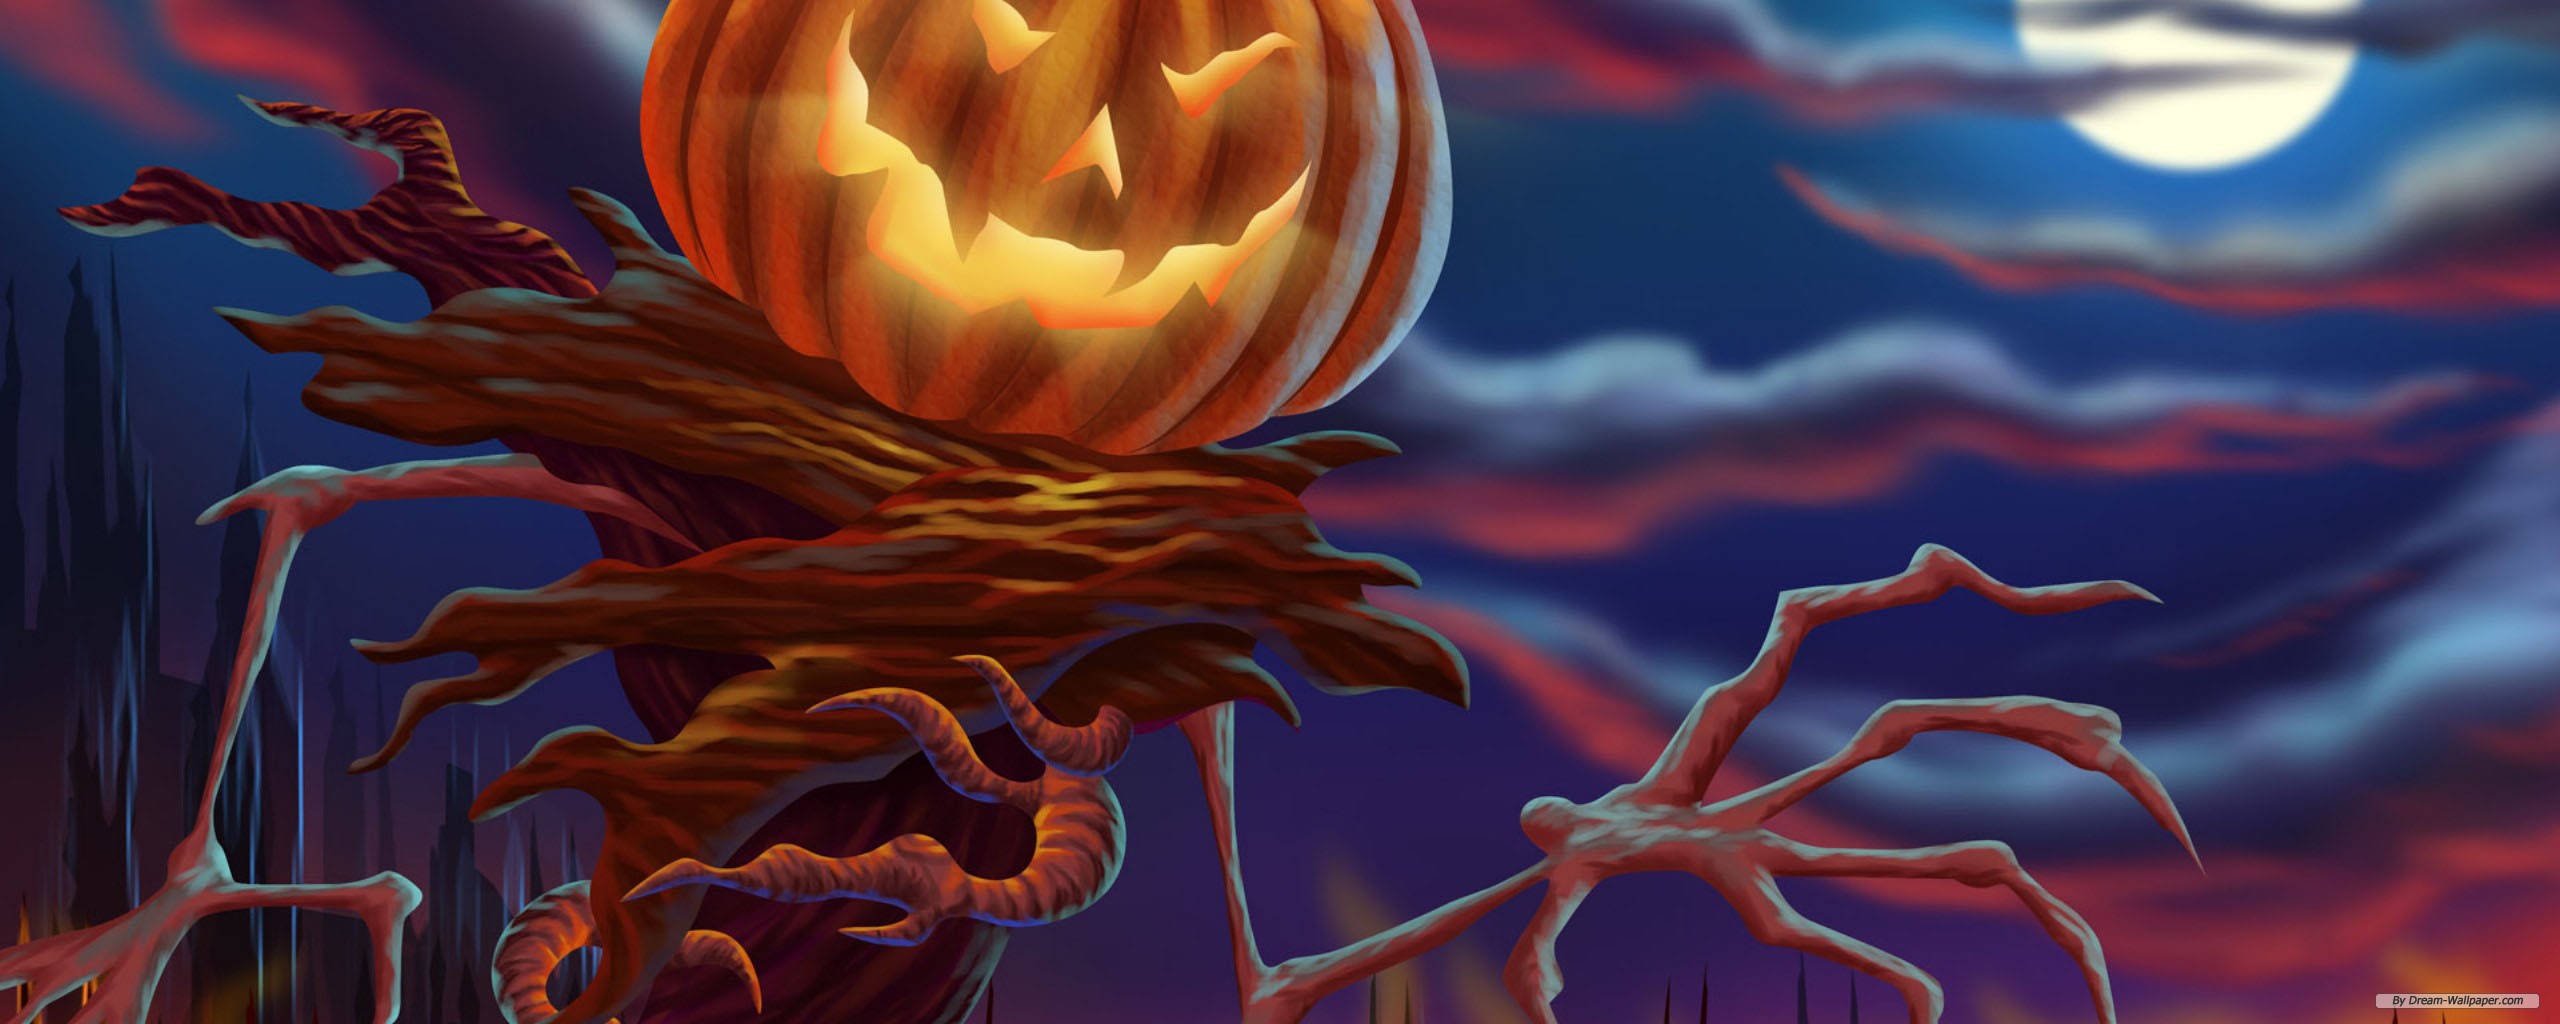 Wallpaper Halloween Episode Dual Screen